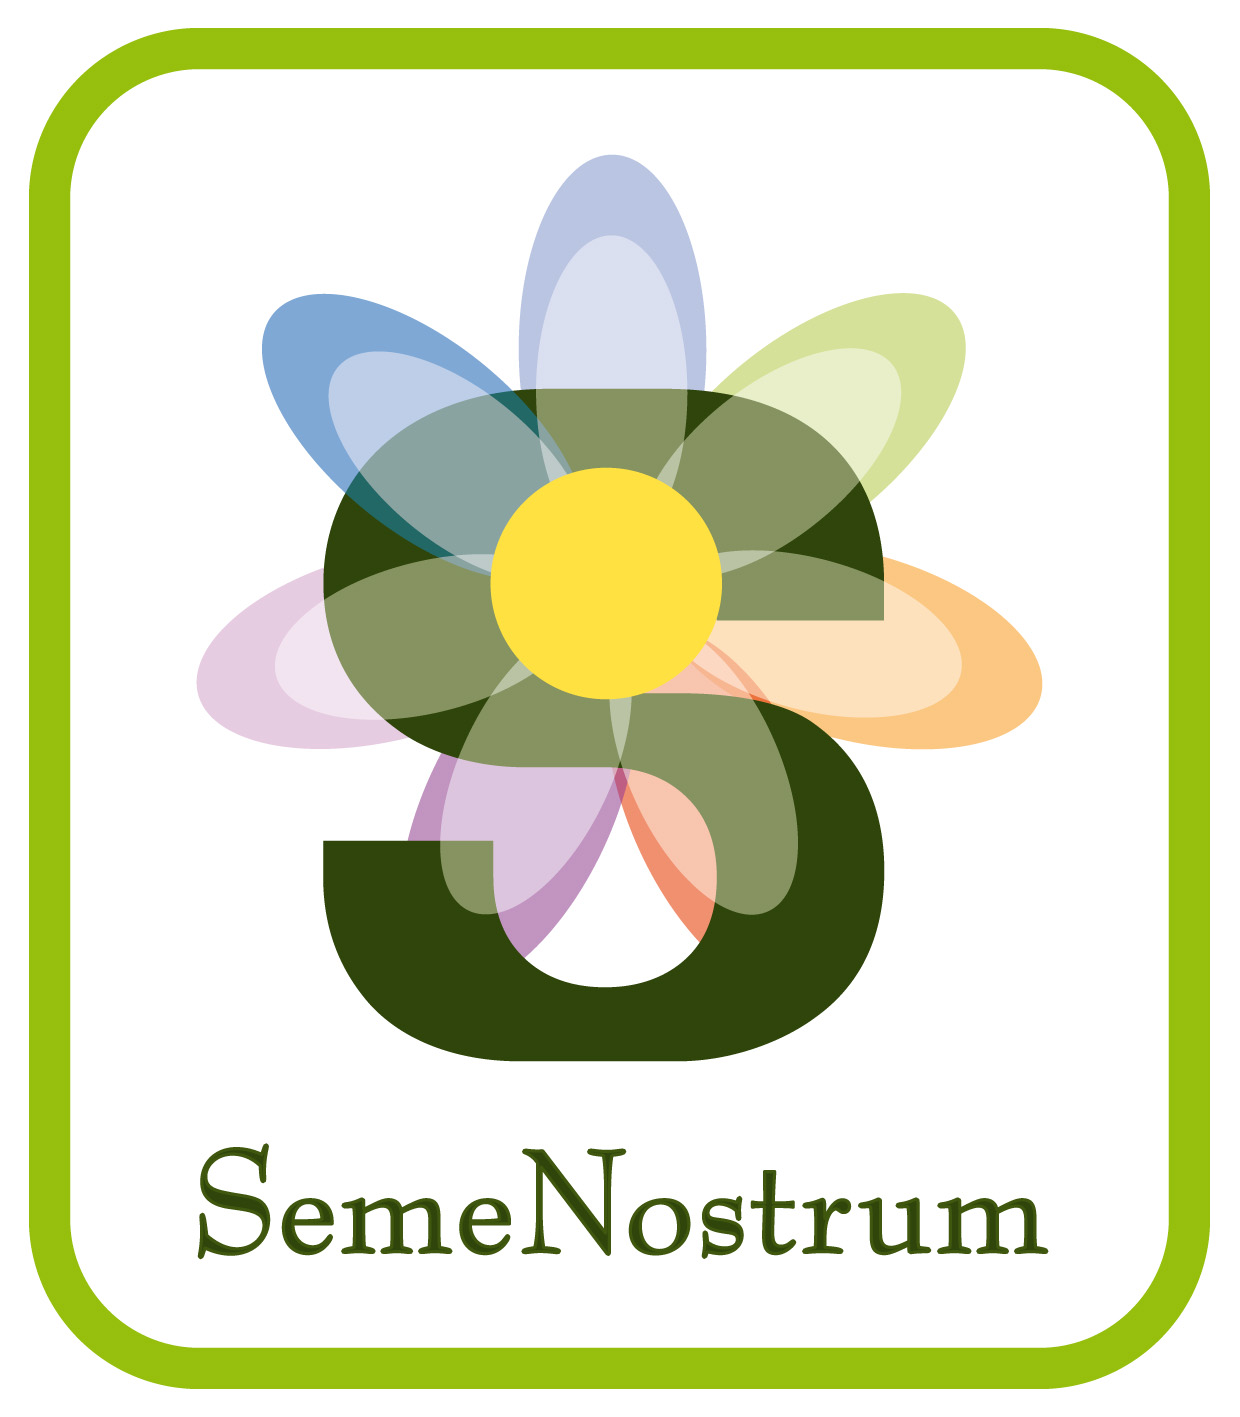 www.semenostrum.it/